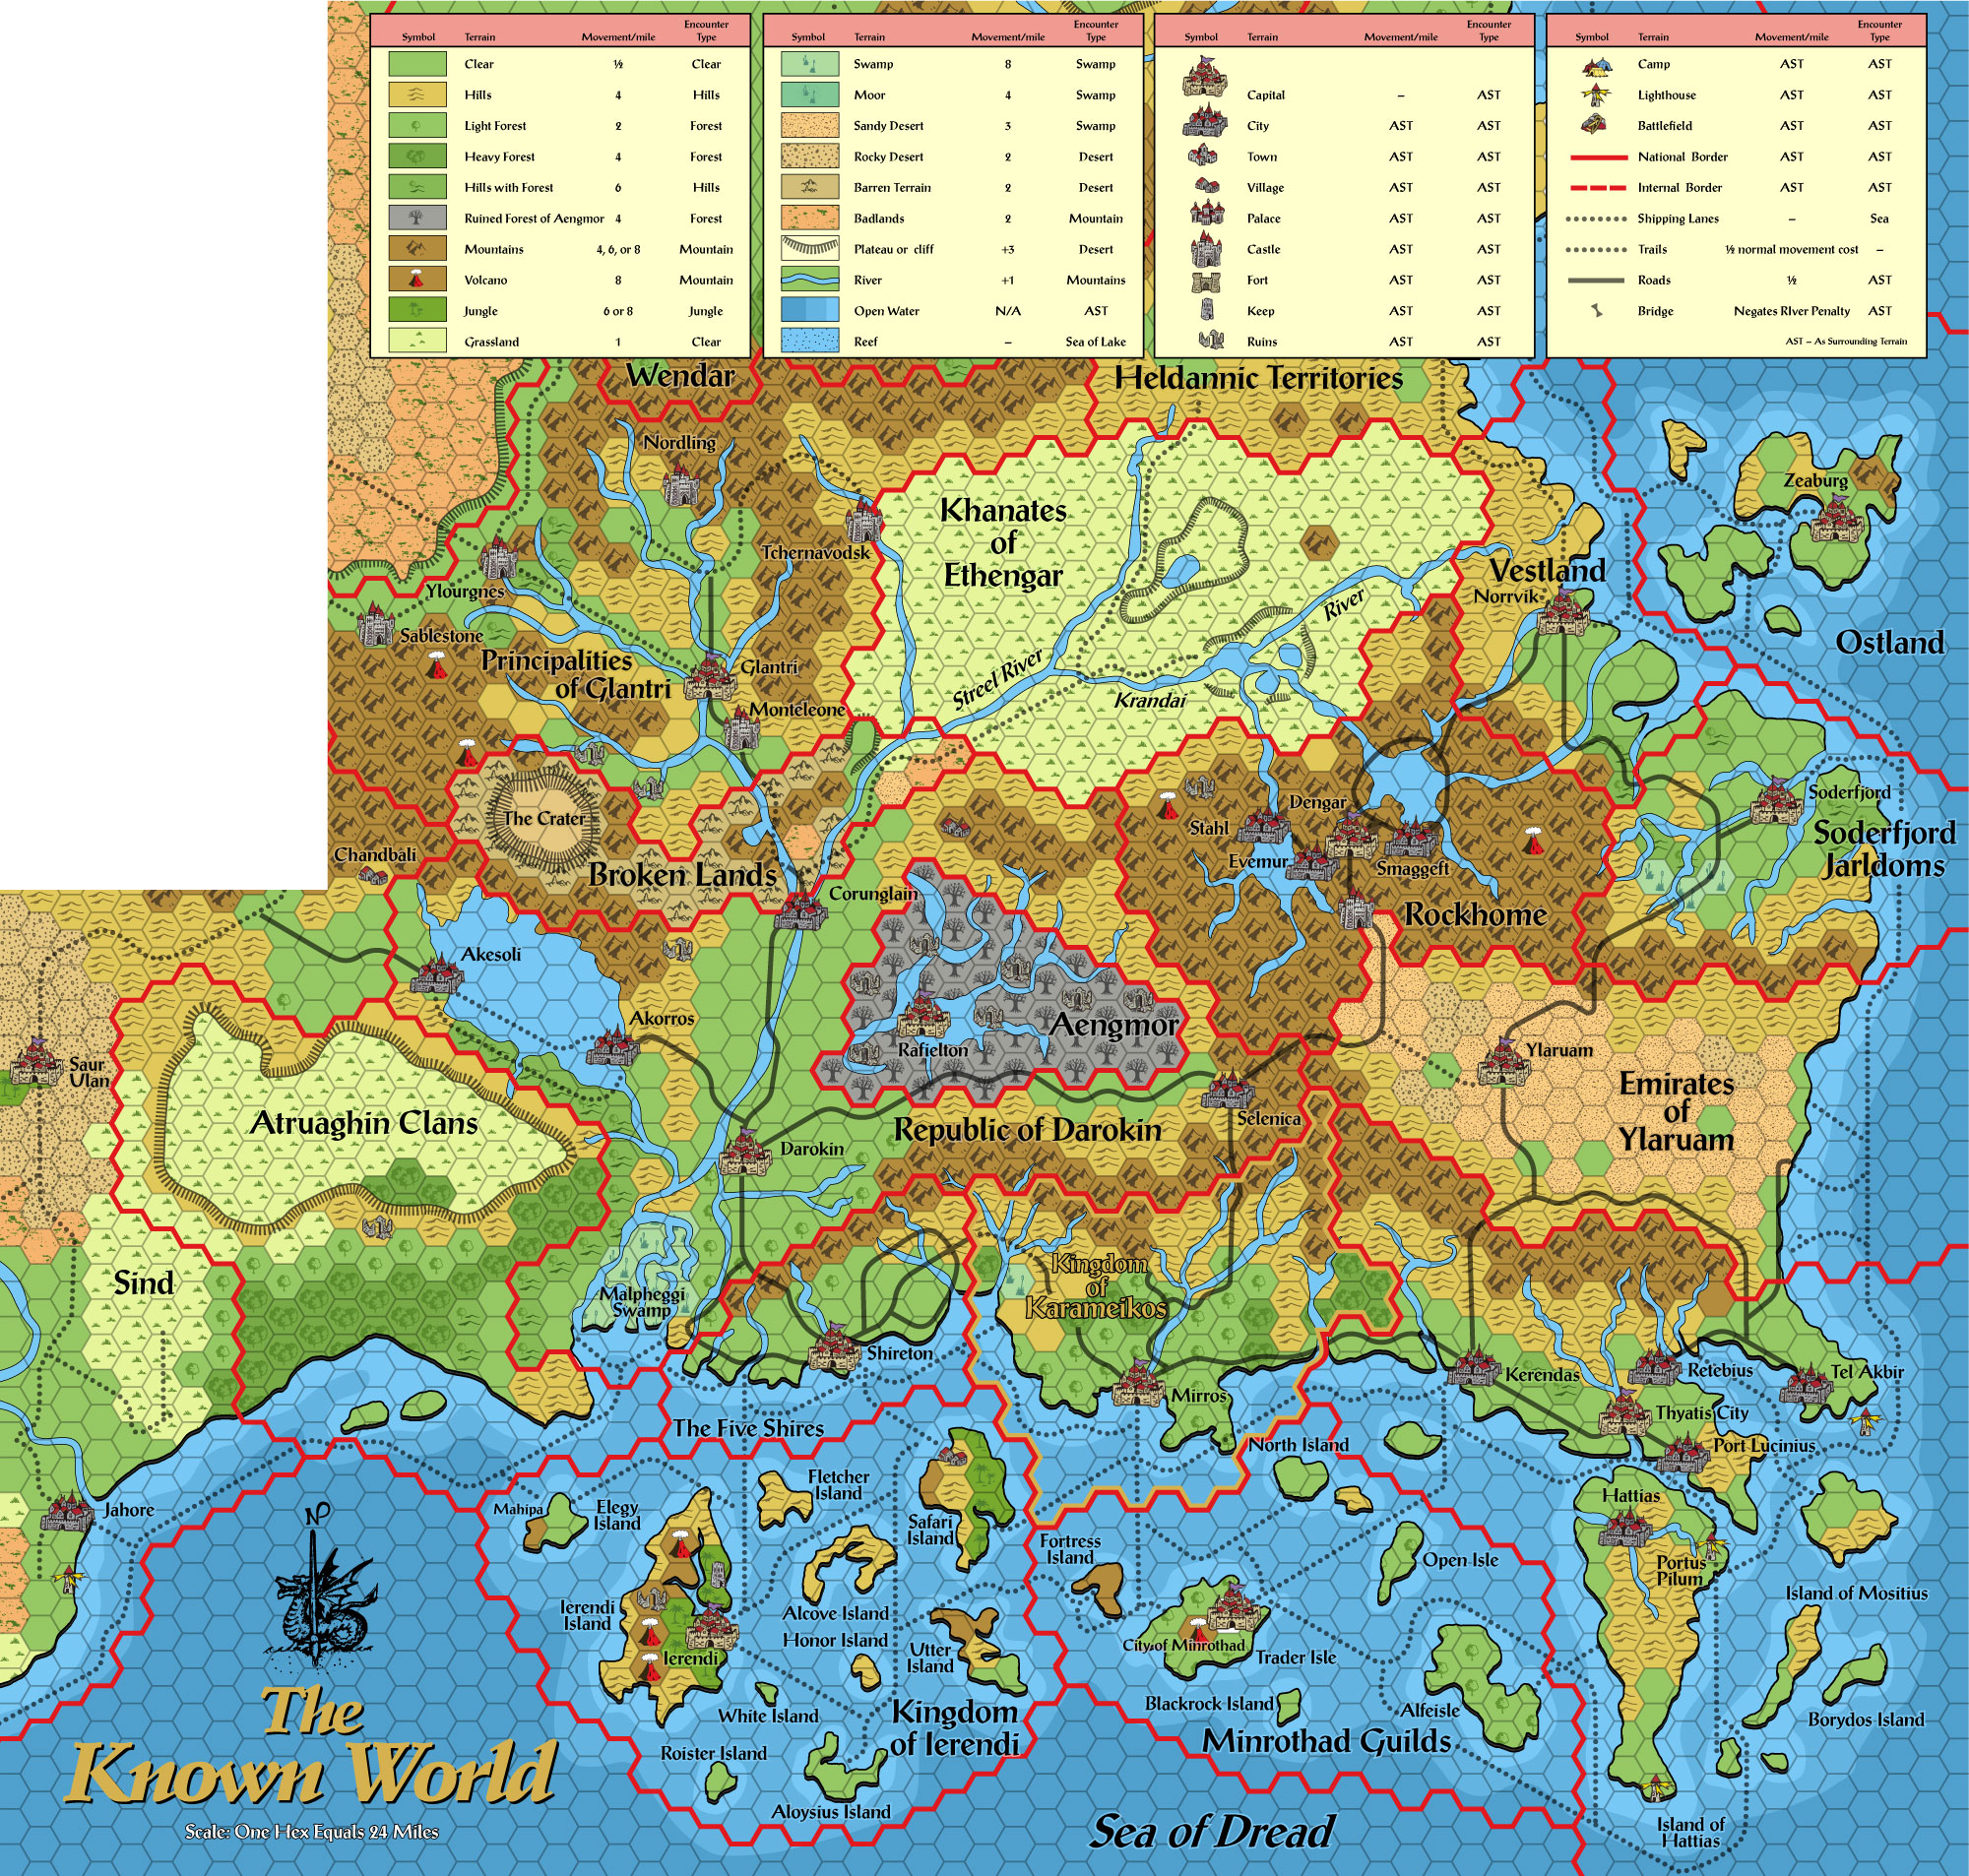 Standardised replica of Karameikos: Kingdom of Adventure map of the Known World, 24 miles per hex